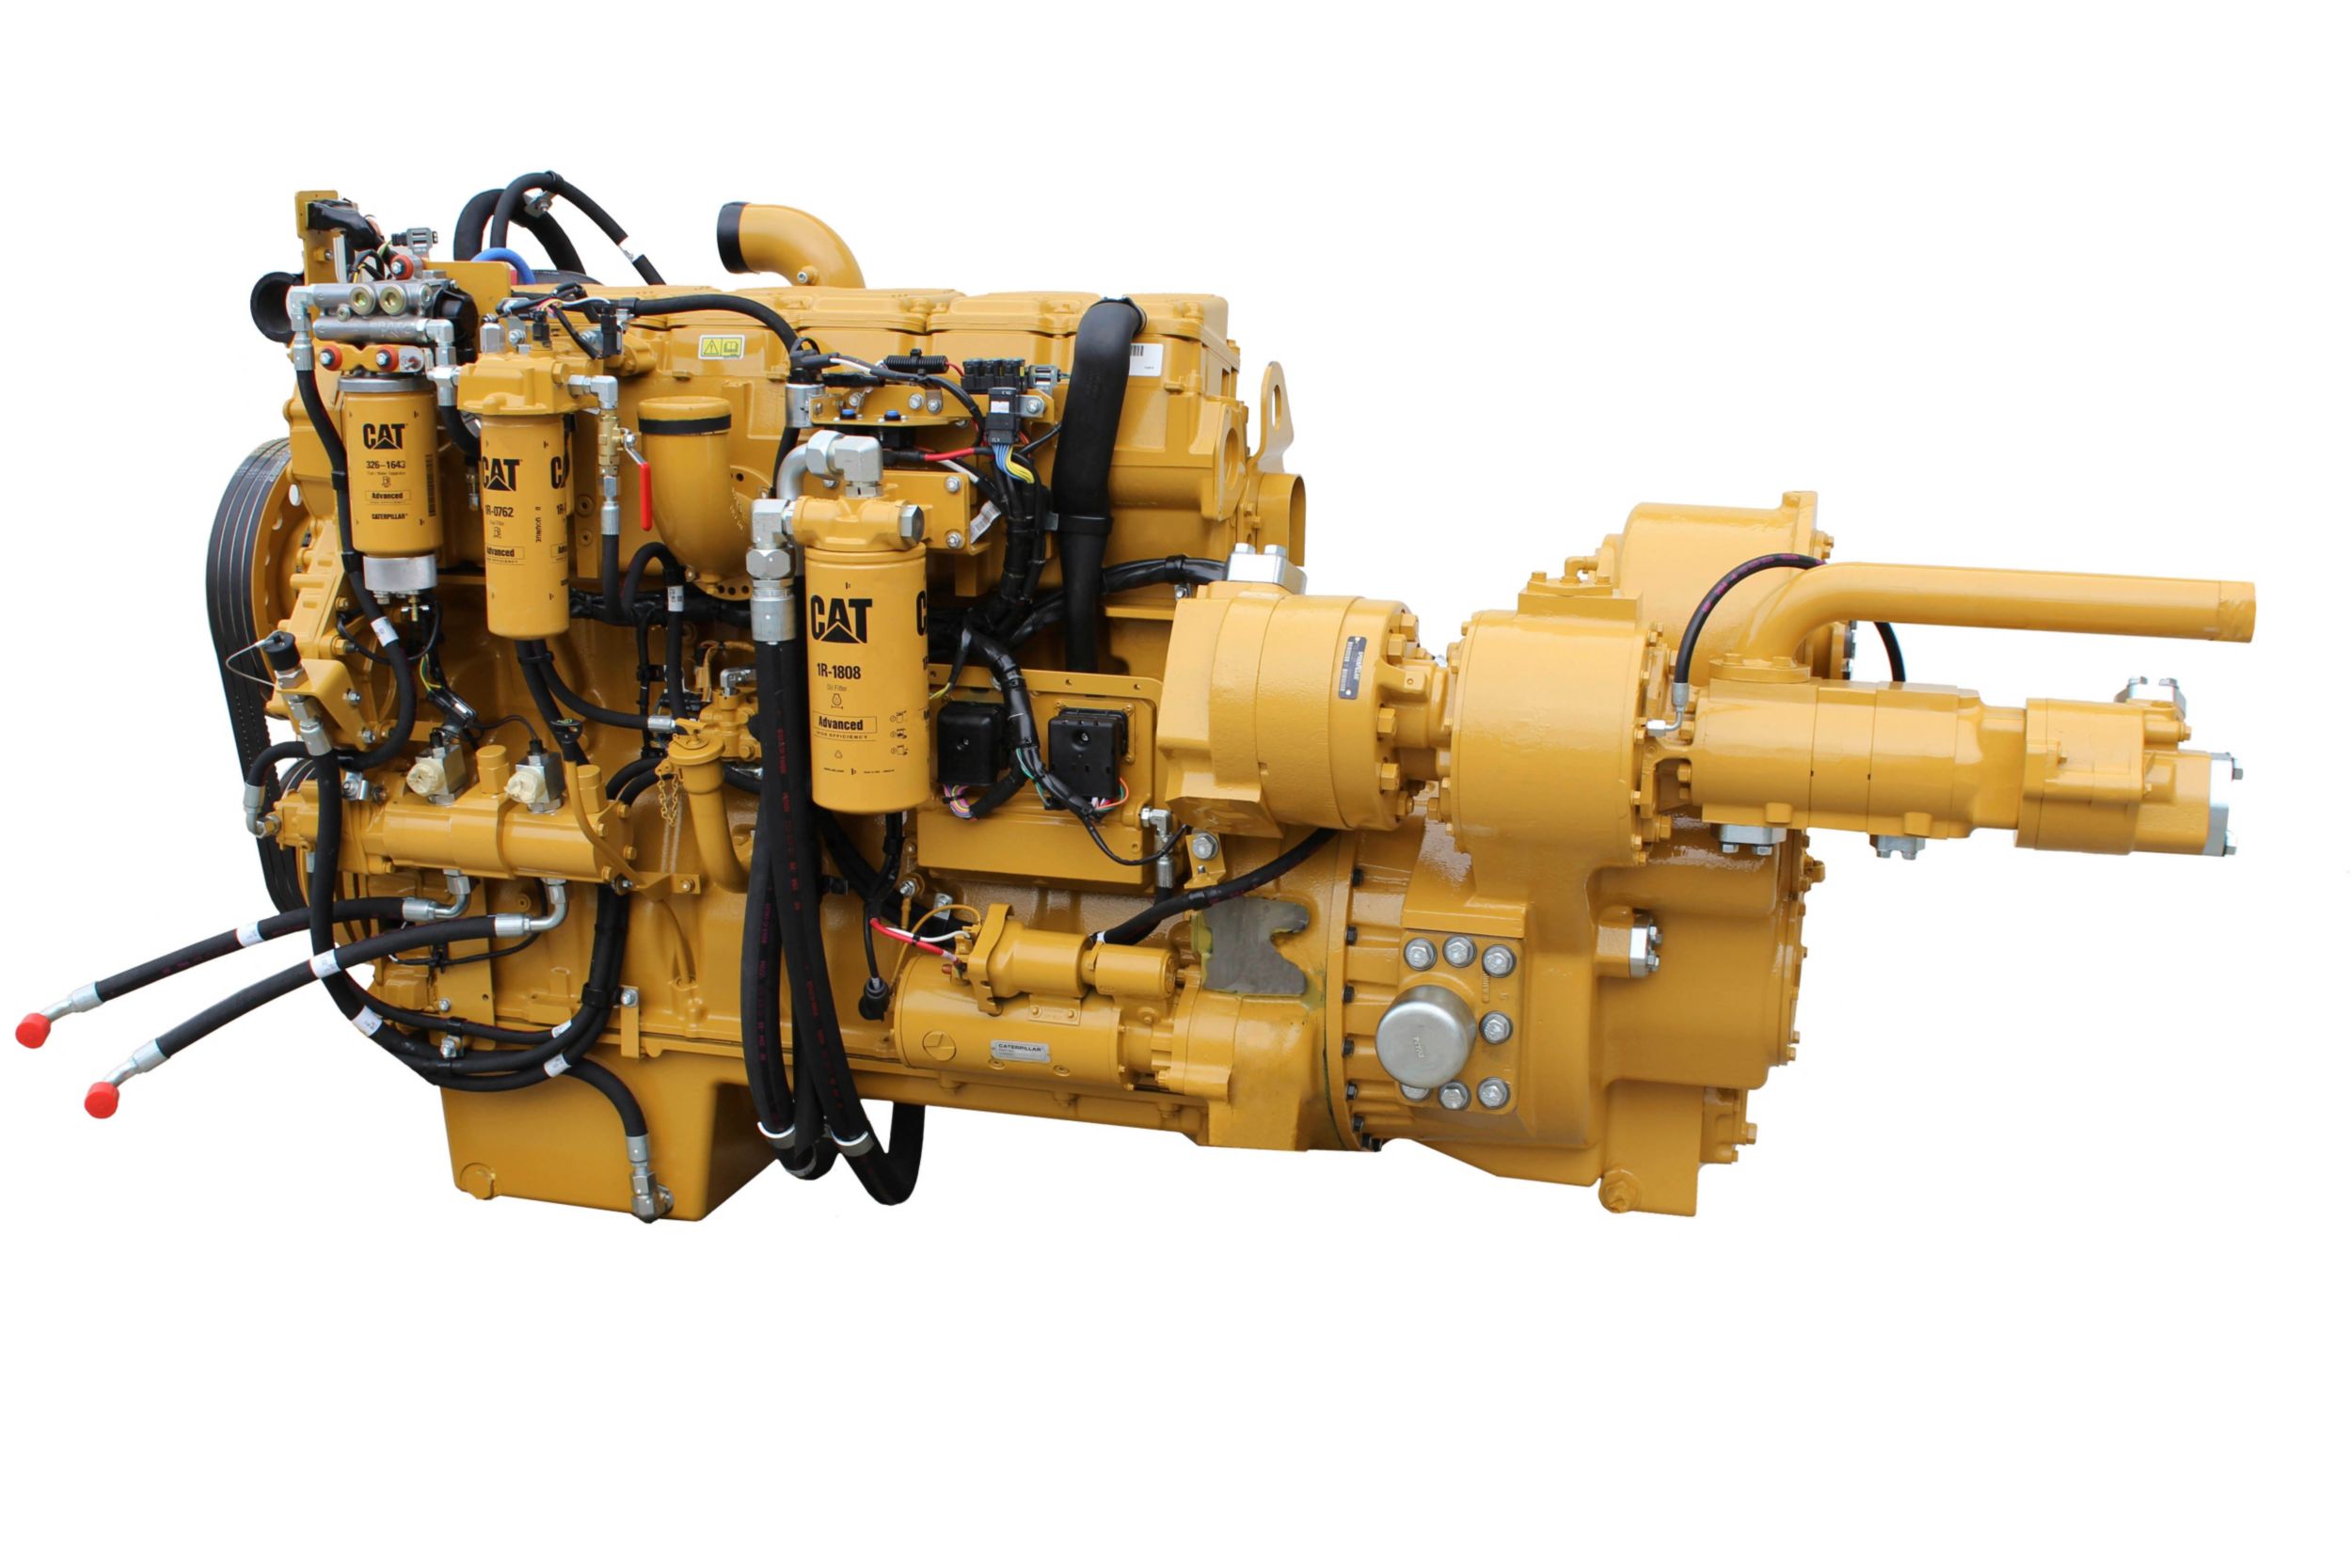 Power Train – Engine – The Cat C15 engine – innovative technologies optimize performance.